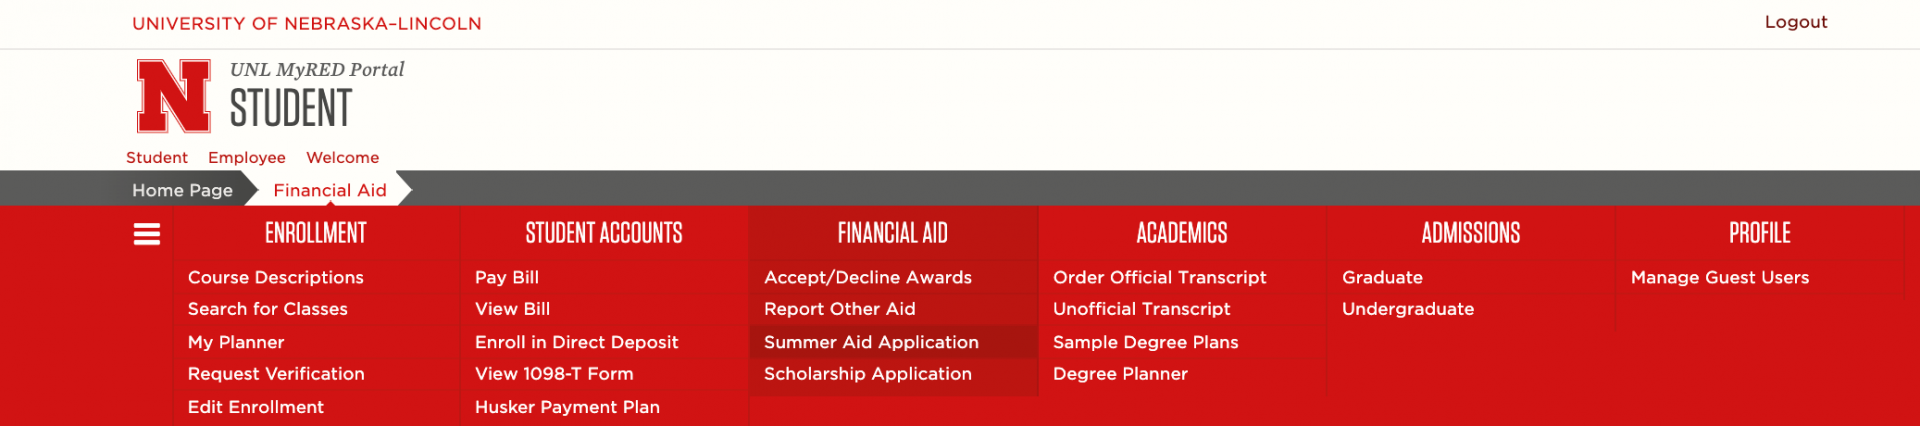 screenshot of web page menu dropdown showing Summer Aid application under Financial Aid